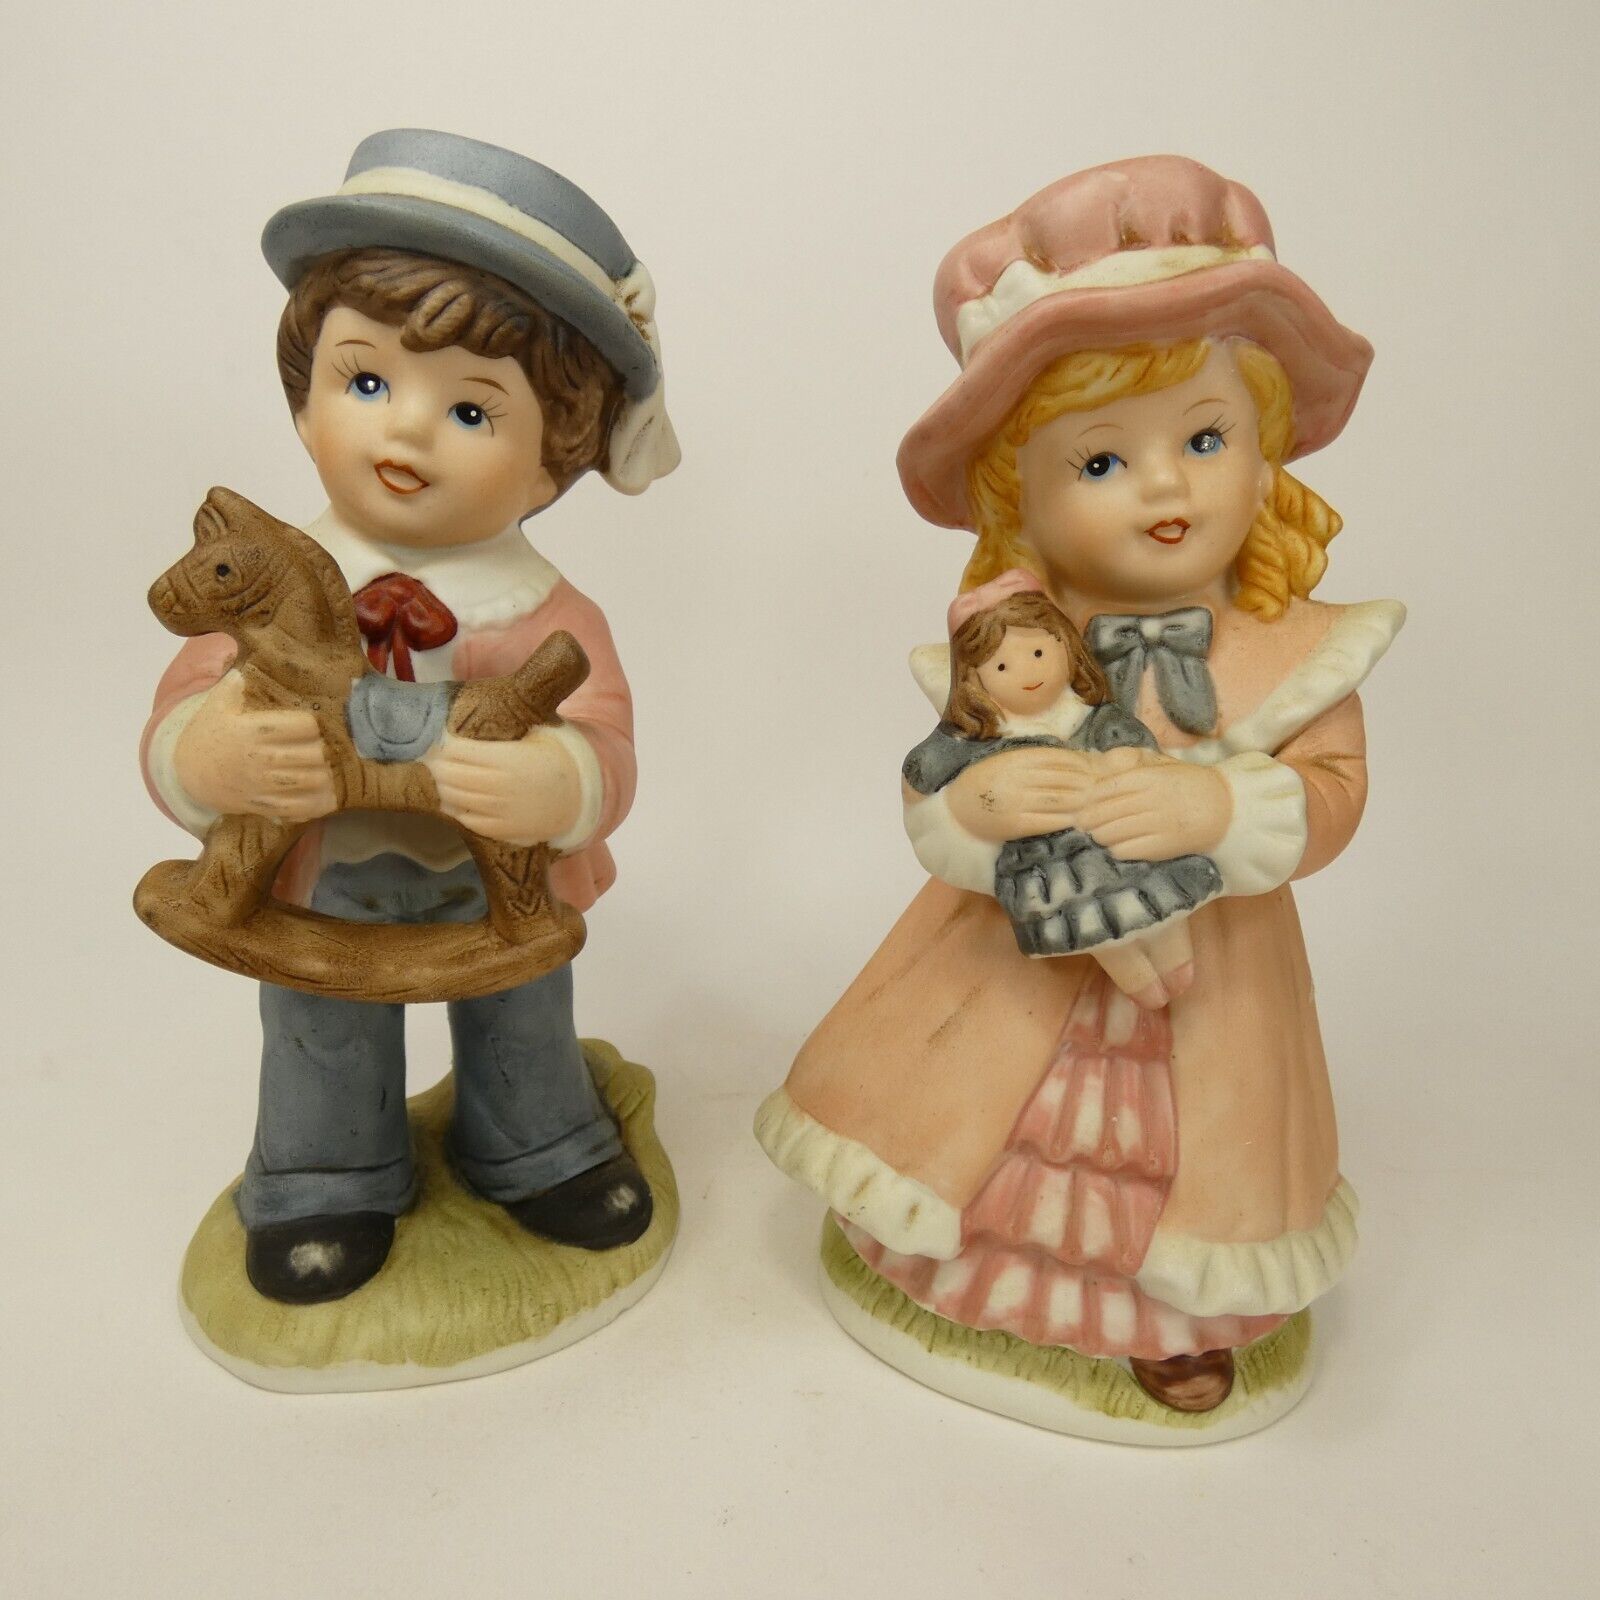 Vintage 1970’s Homco Girl Doll Boy Rocking Horse Toys Figurine #1419 AGJ&L